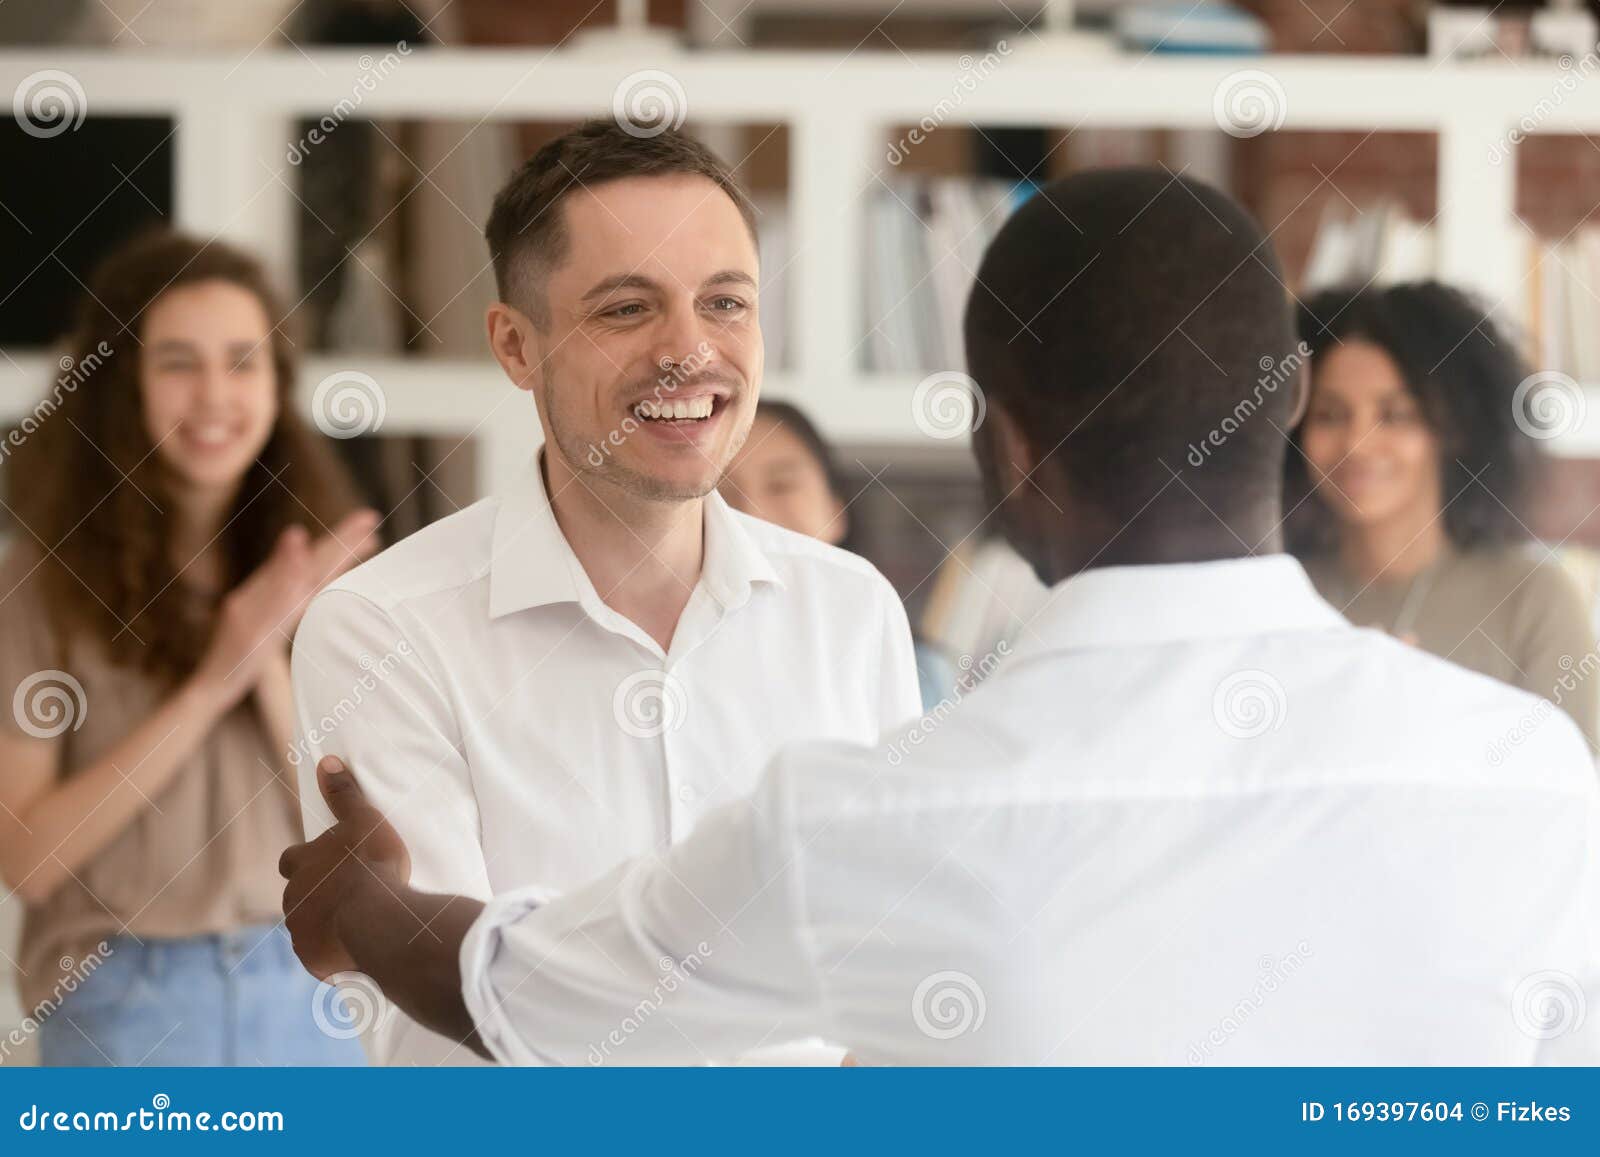 black boss handshake congratulating excited caucasian employee